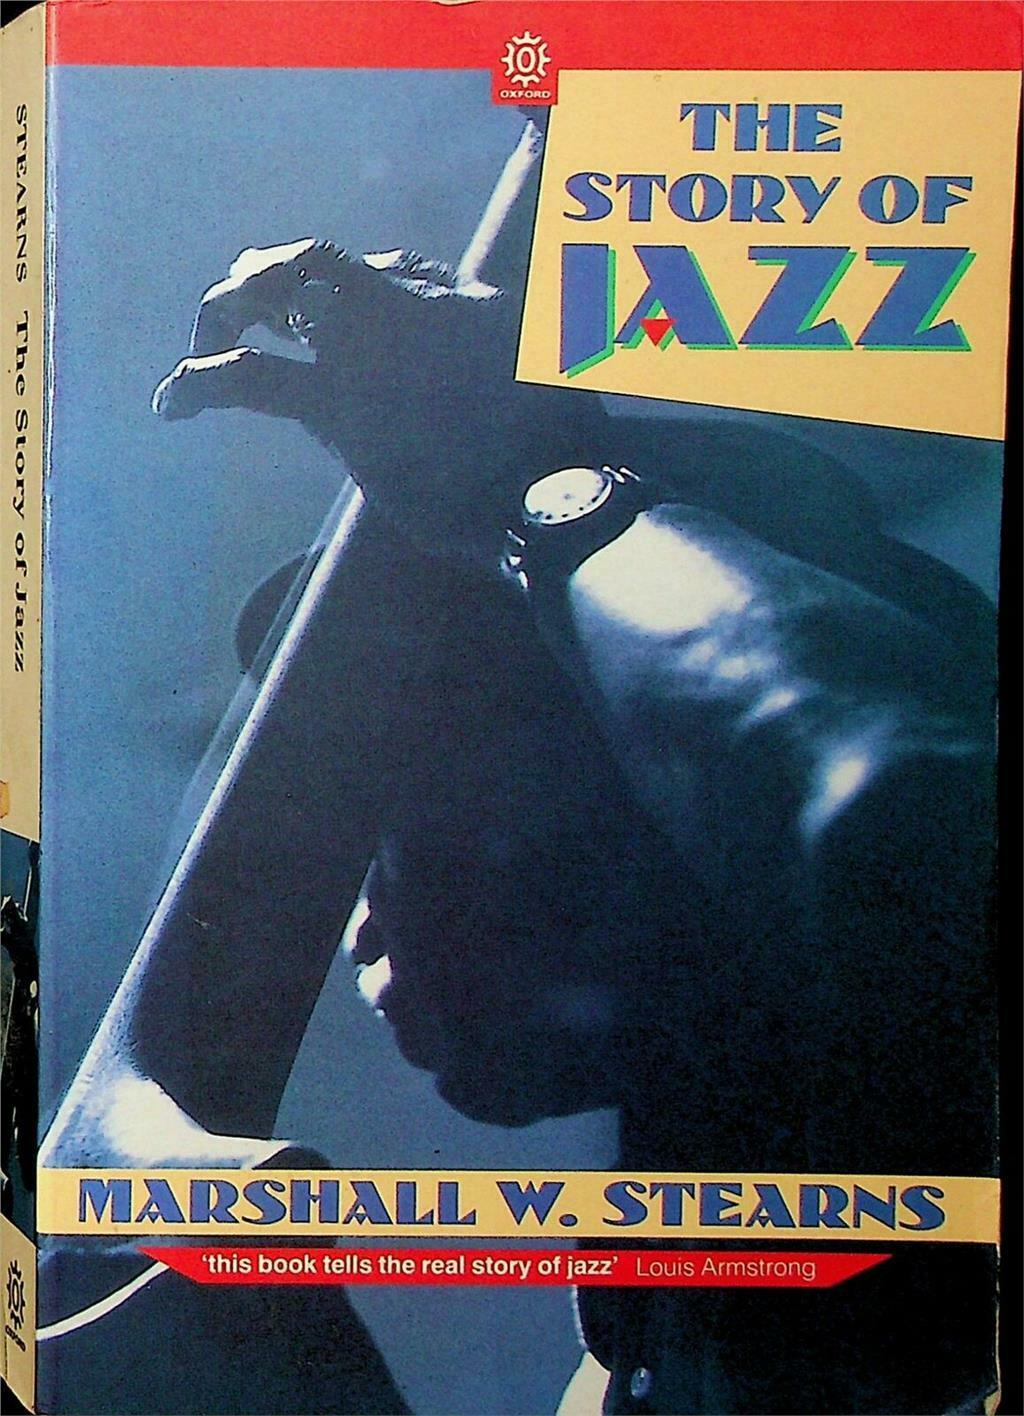 The Story of Jazz | Oggies Music